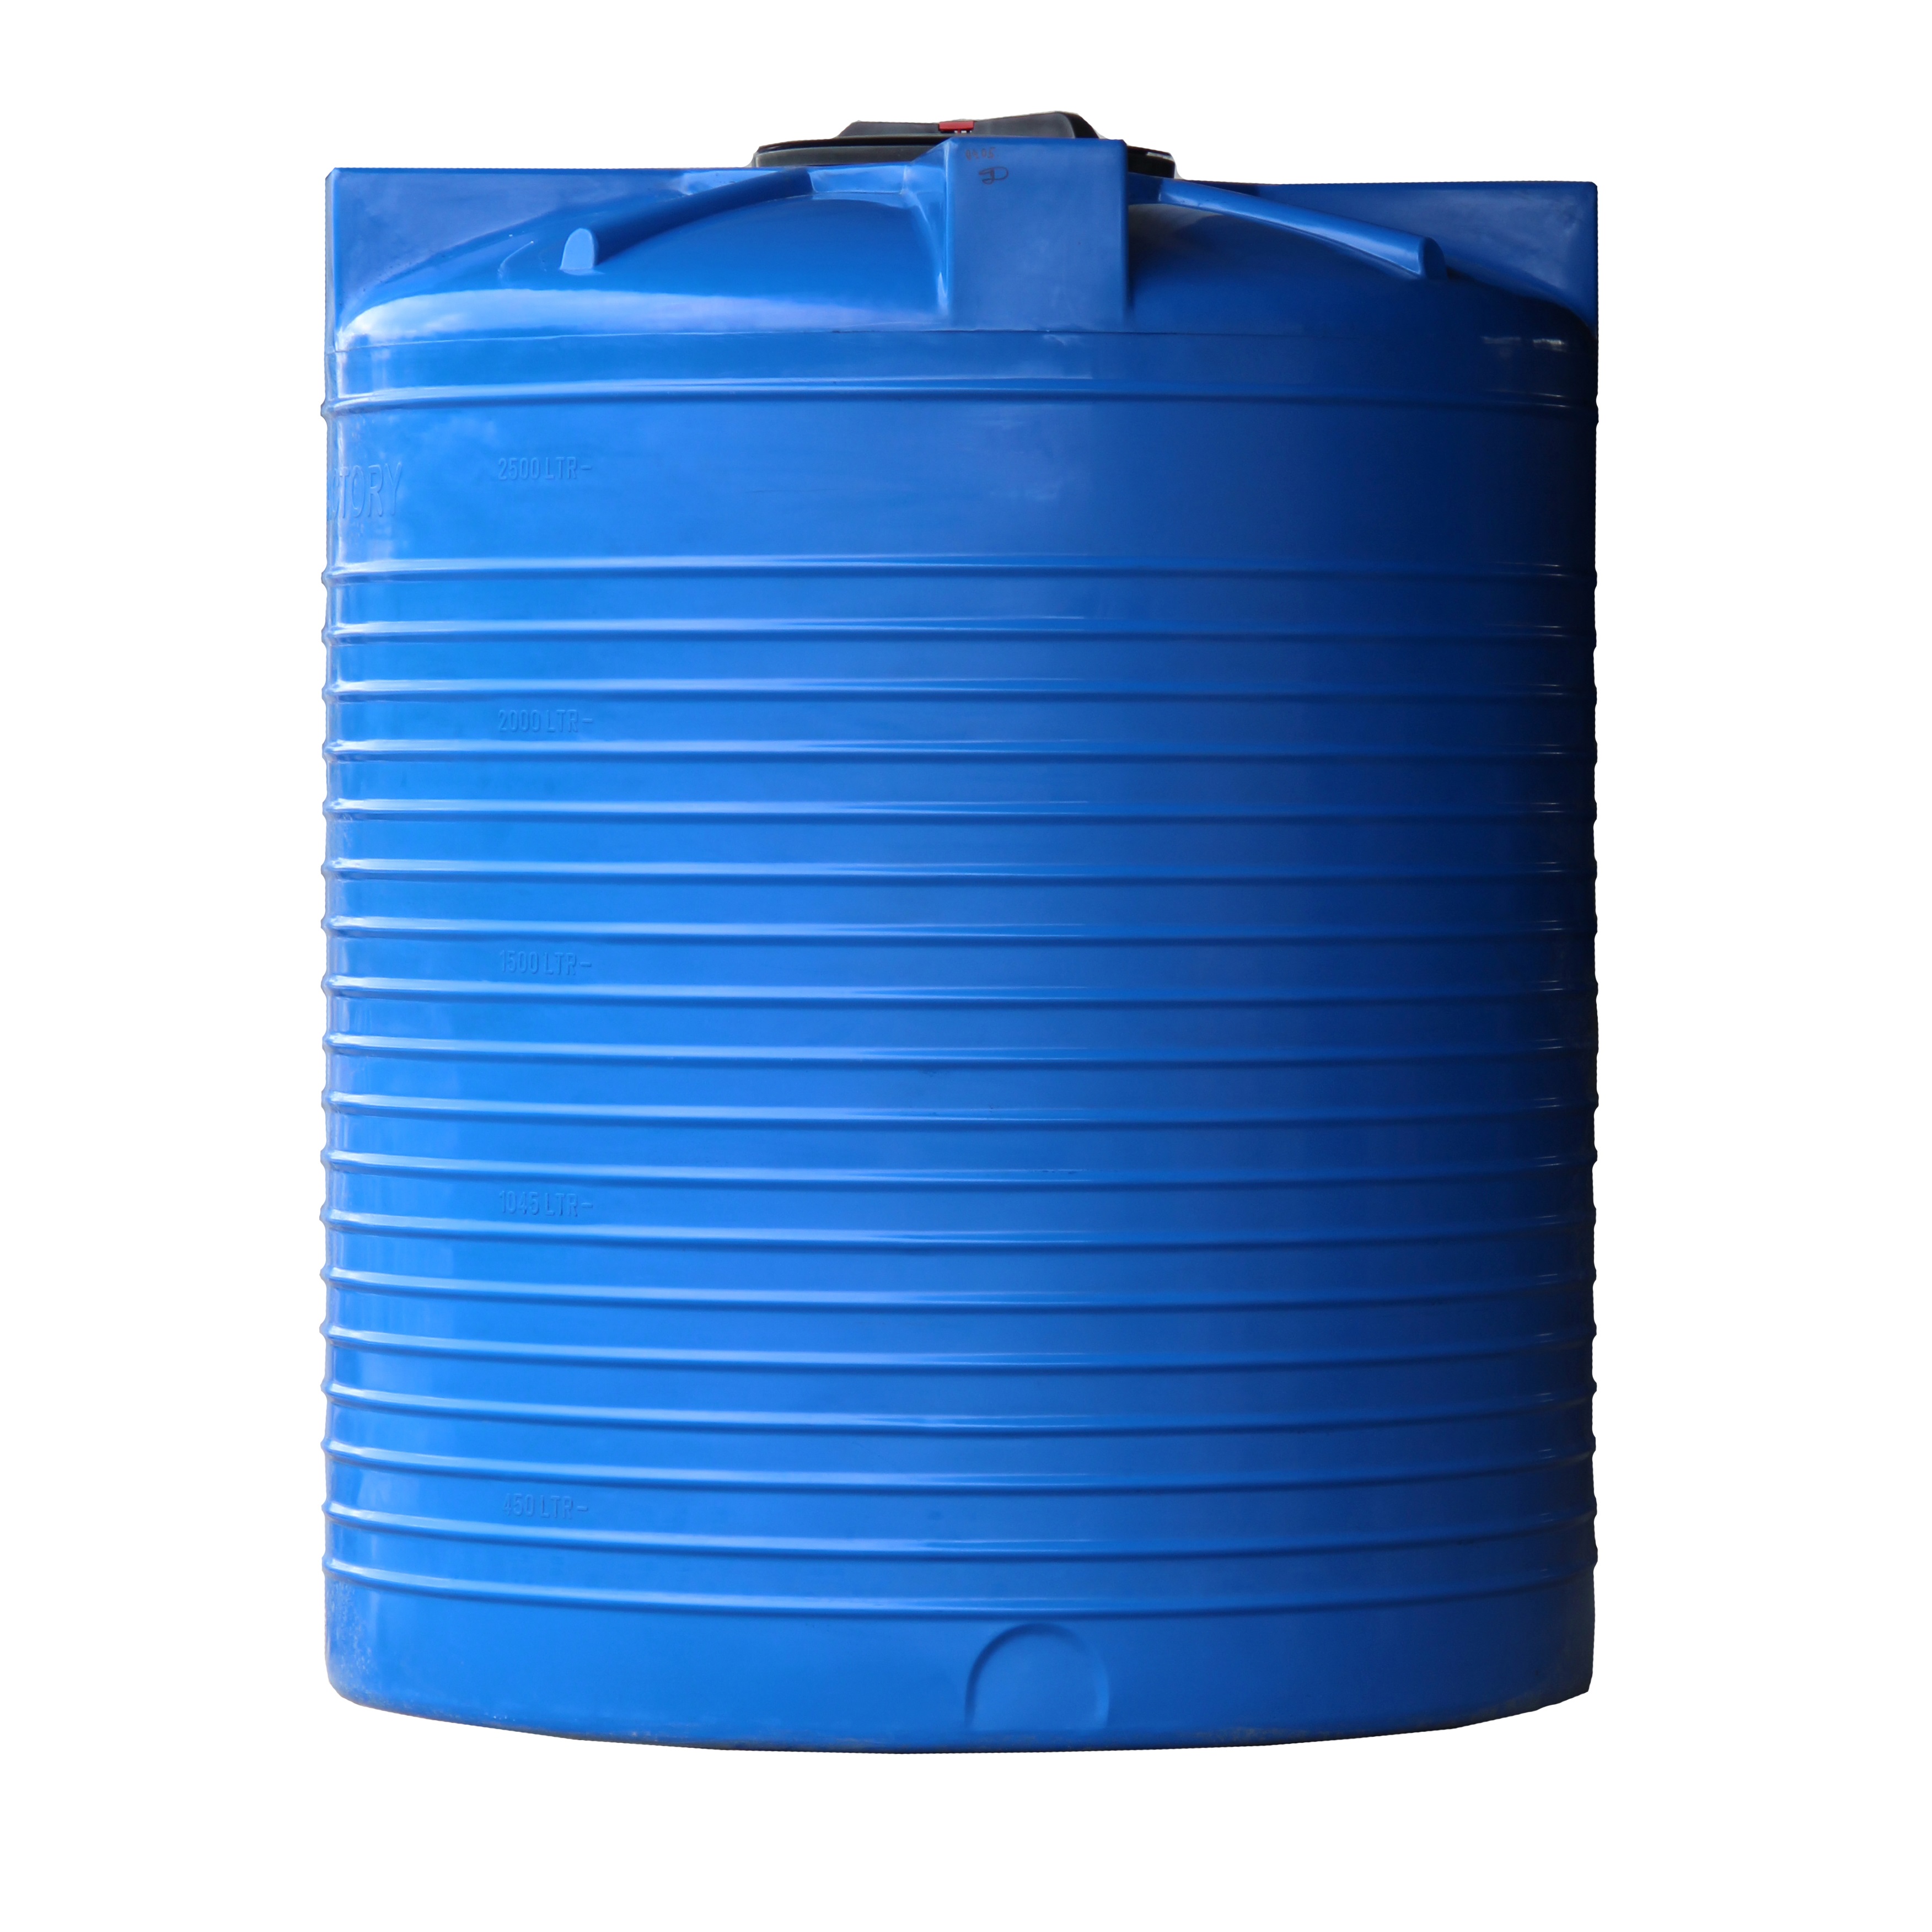 Баки для воды из стали. Емкость Sterh sq 1000 Blue. Sterh емкость Vert 2000 Blue 531333. Емкость Sterh Vert 2000 Blue. Емкость Sterh Vert 3000 Blue.